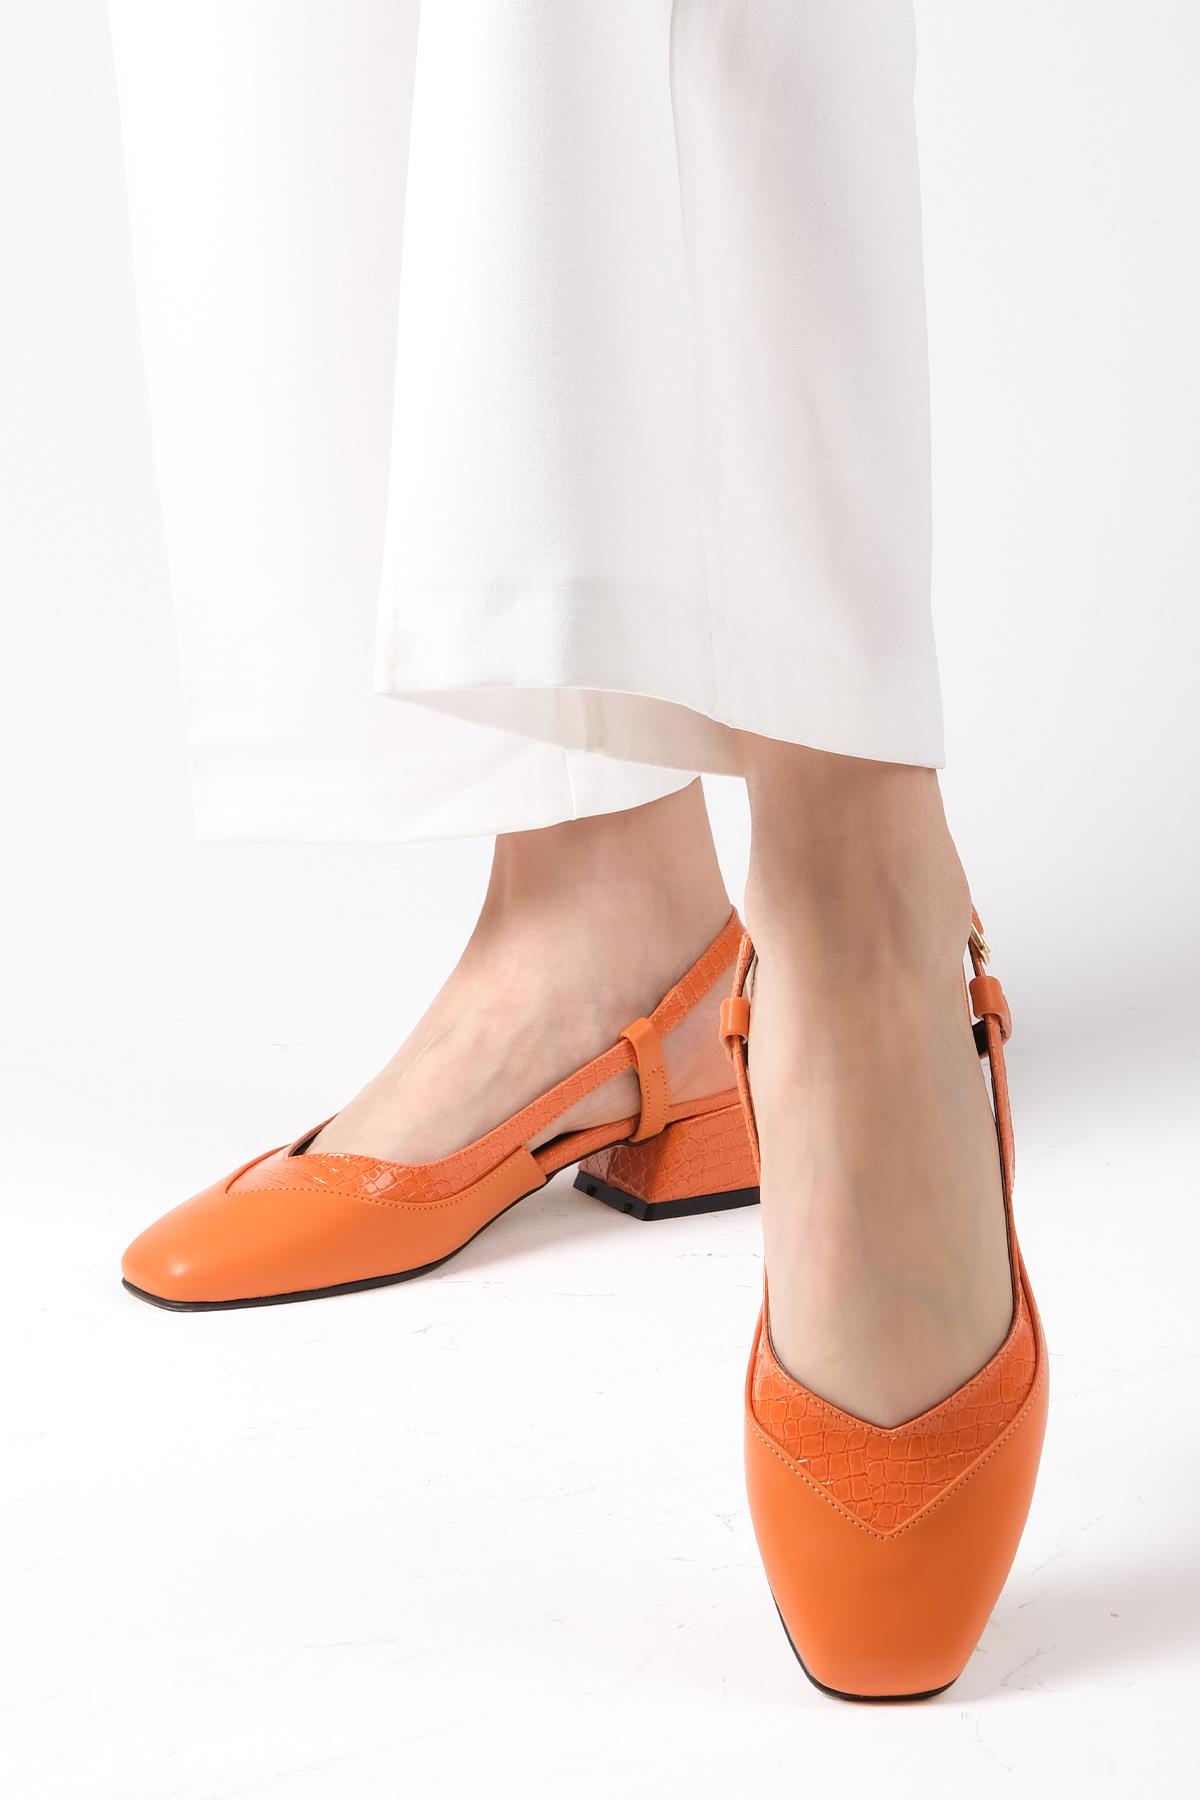 Mio Gusto Turuncu Renk Kısa Topuklu Ayakkabı